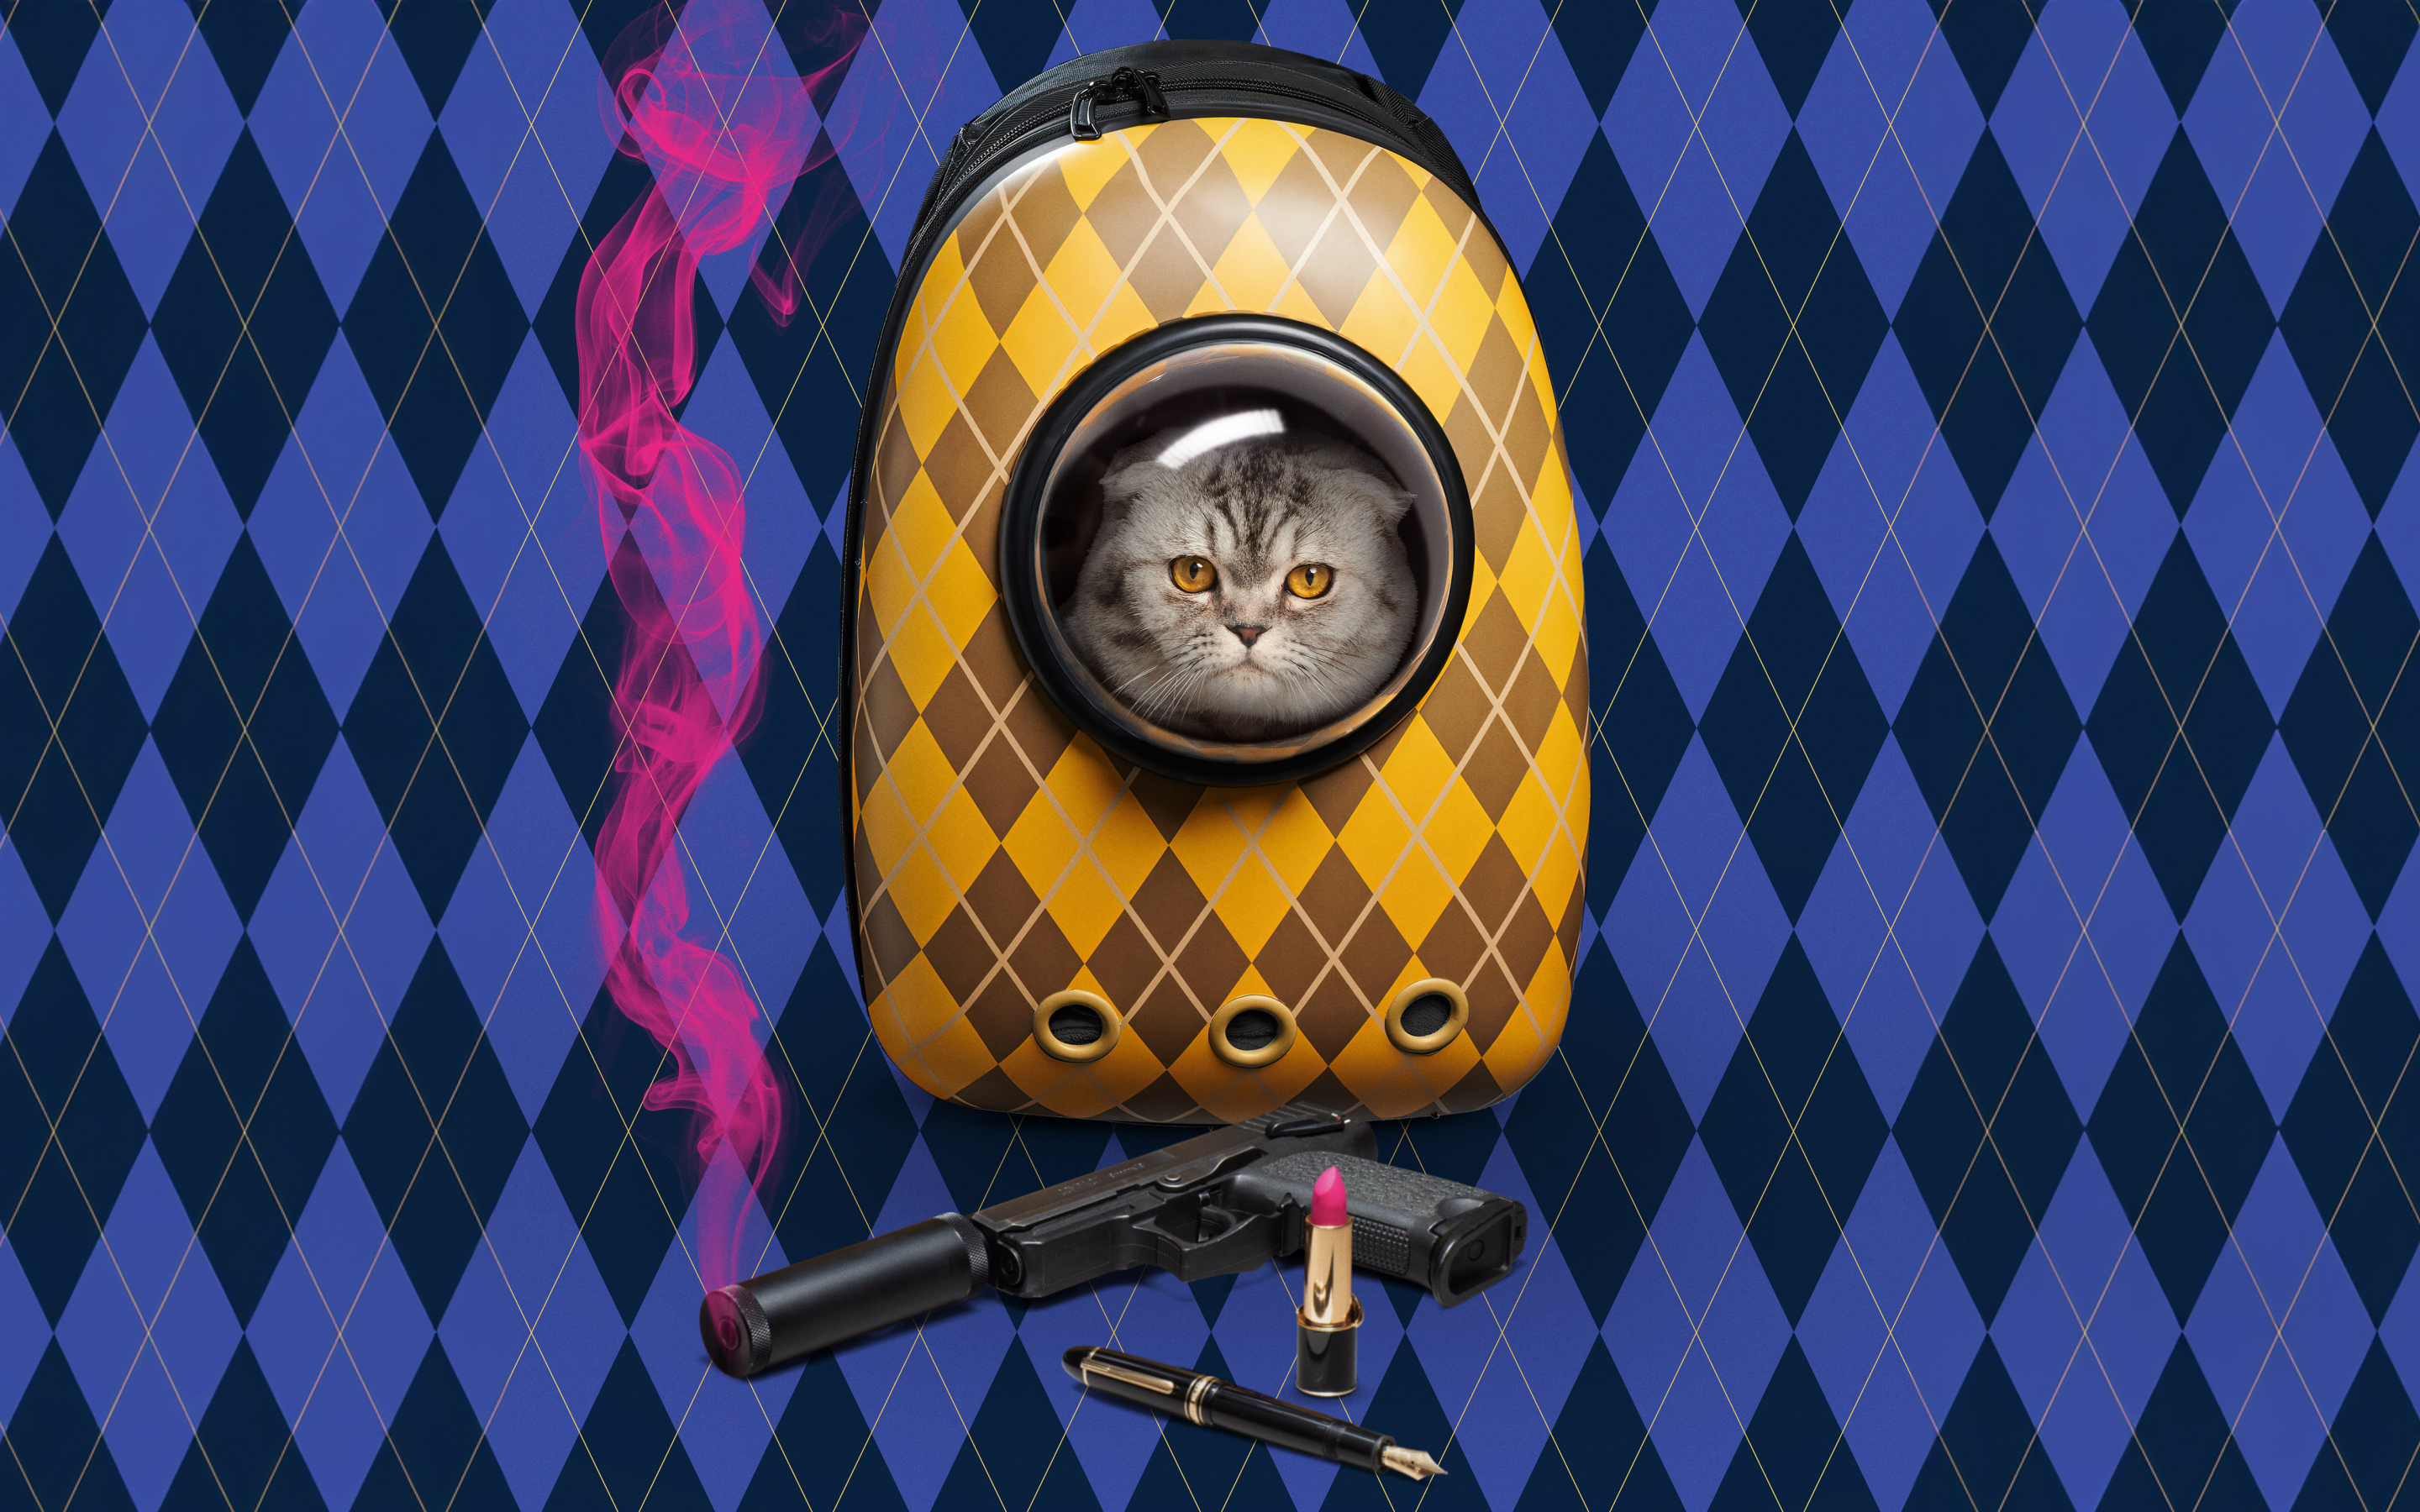 Argylle movie, cat in bag and gun, 2880x1800 wallpaper